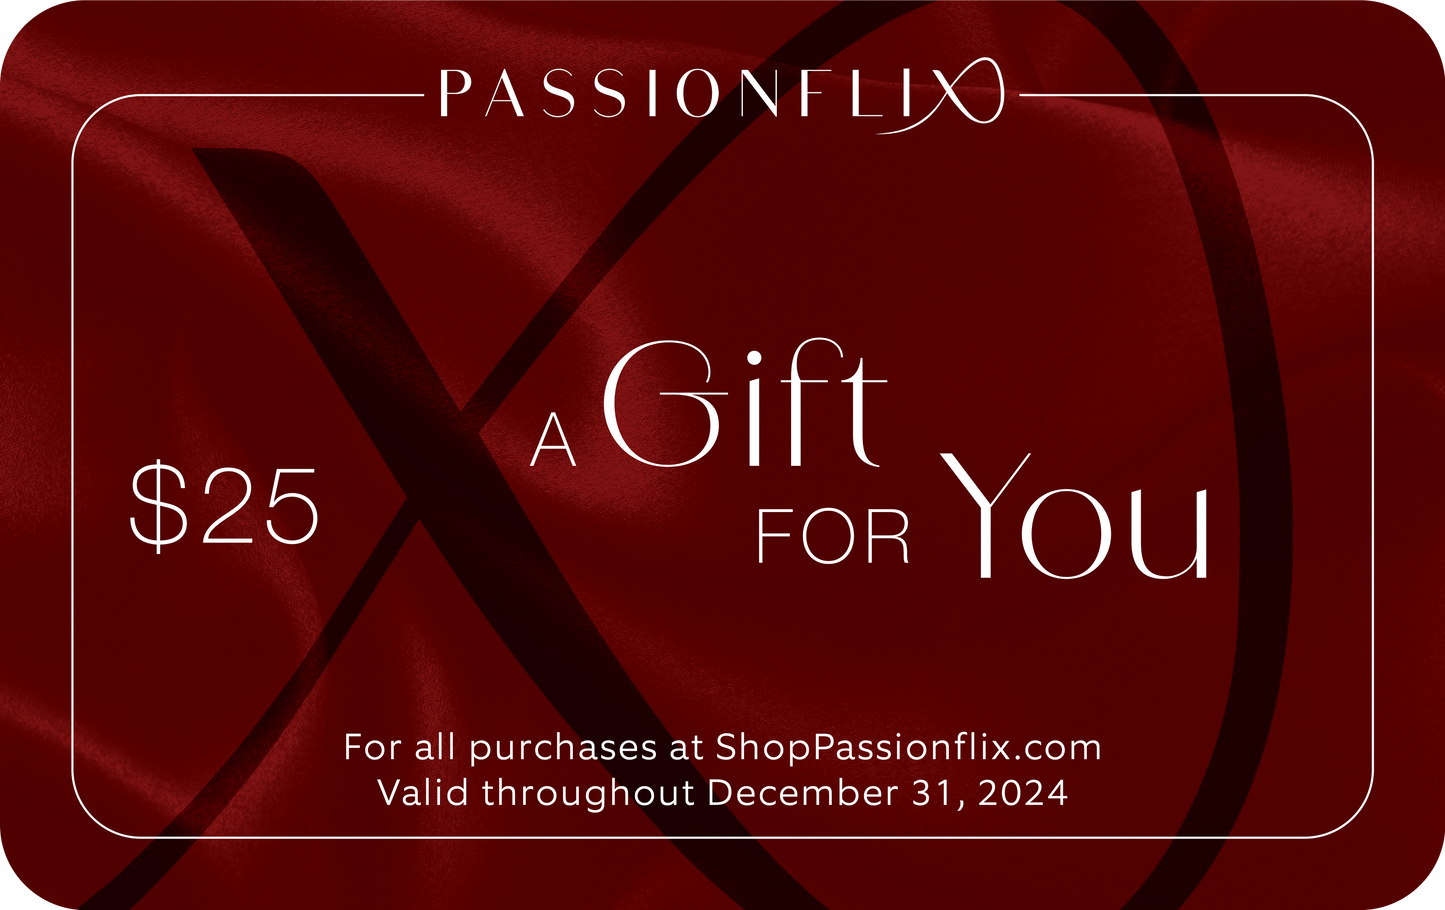 Passionflix Shop Gift Card